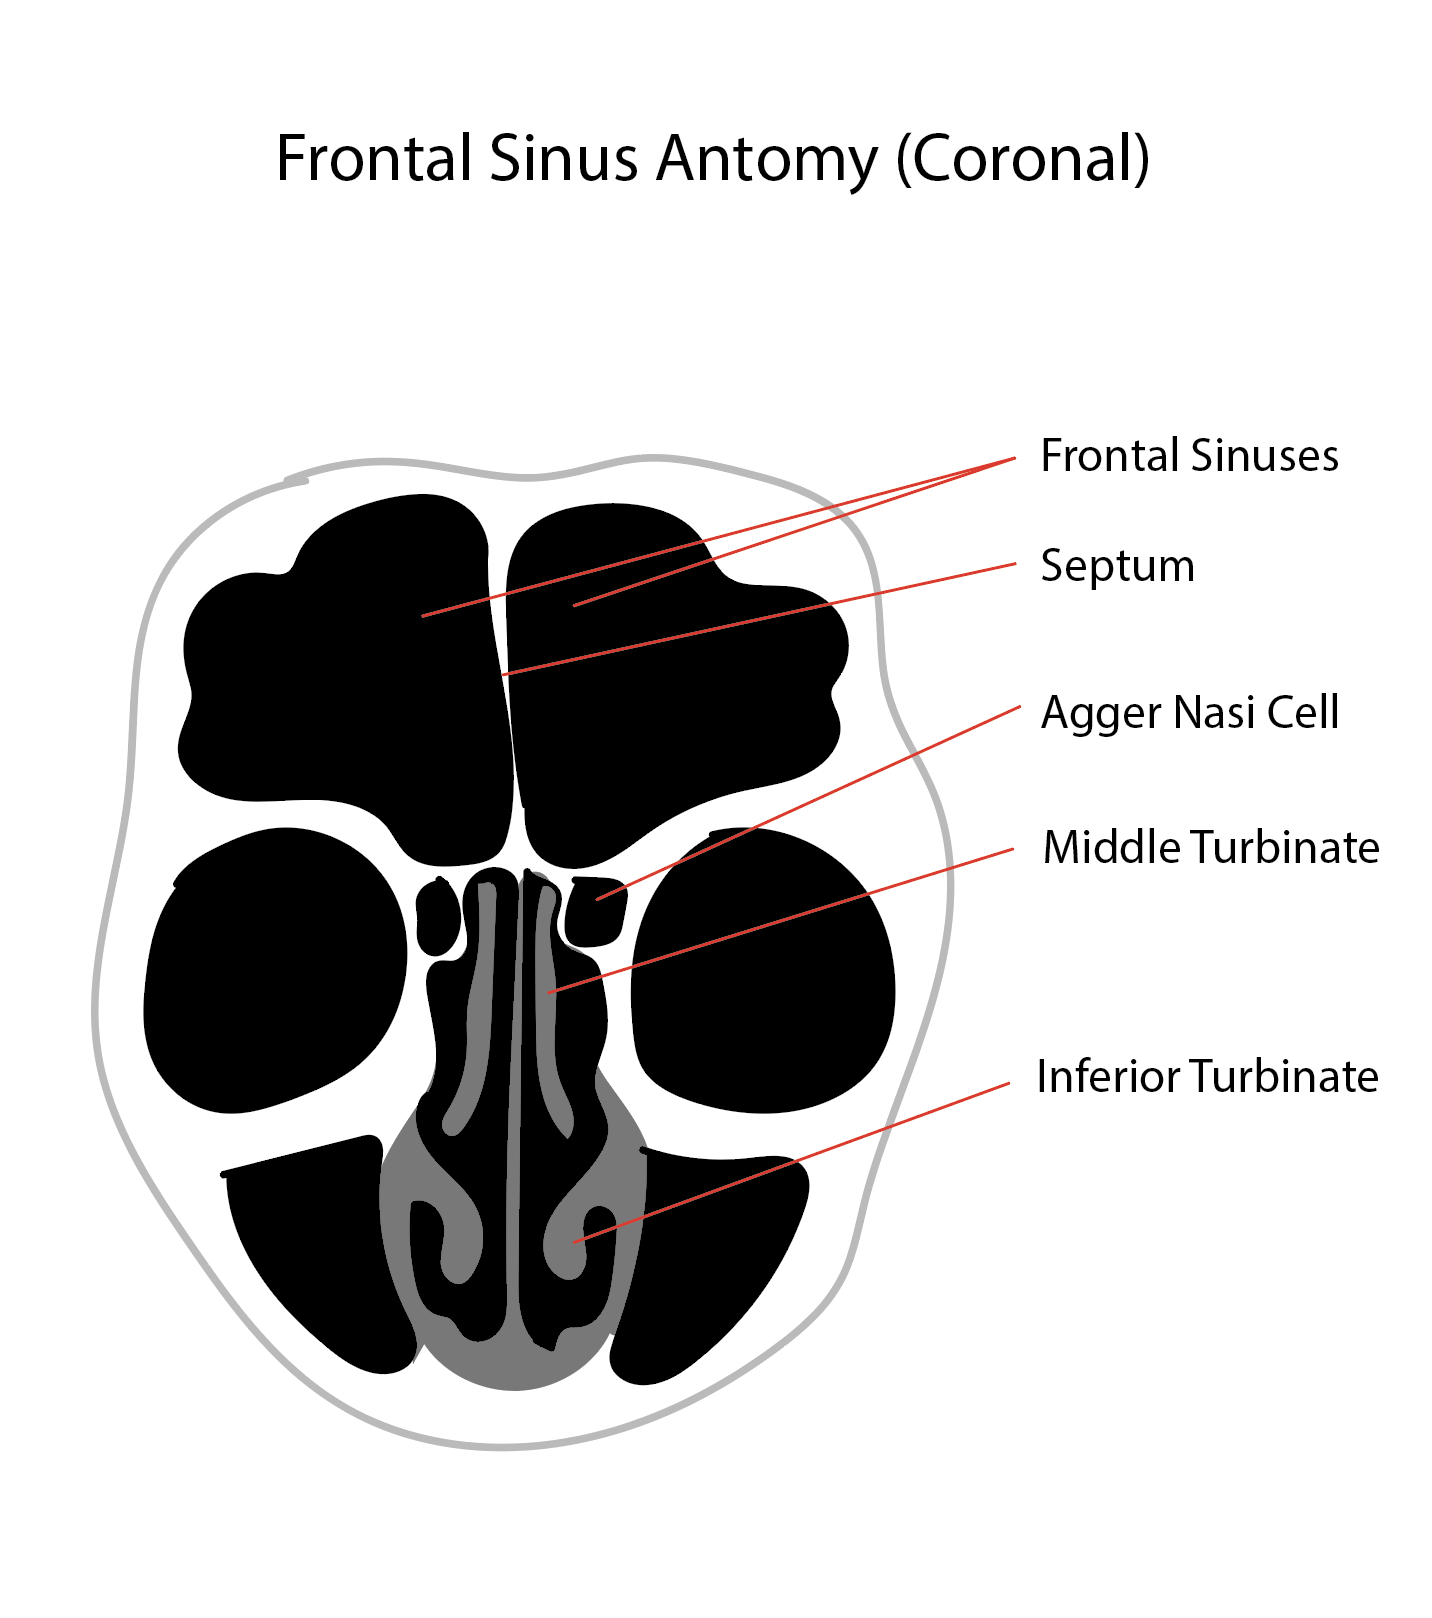 Diagram of the frontal sinus anatomy, coronal view.